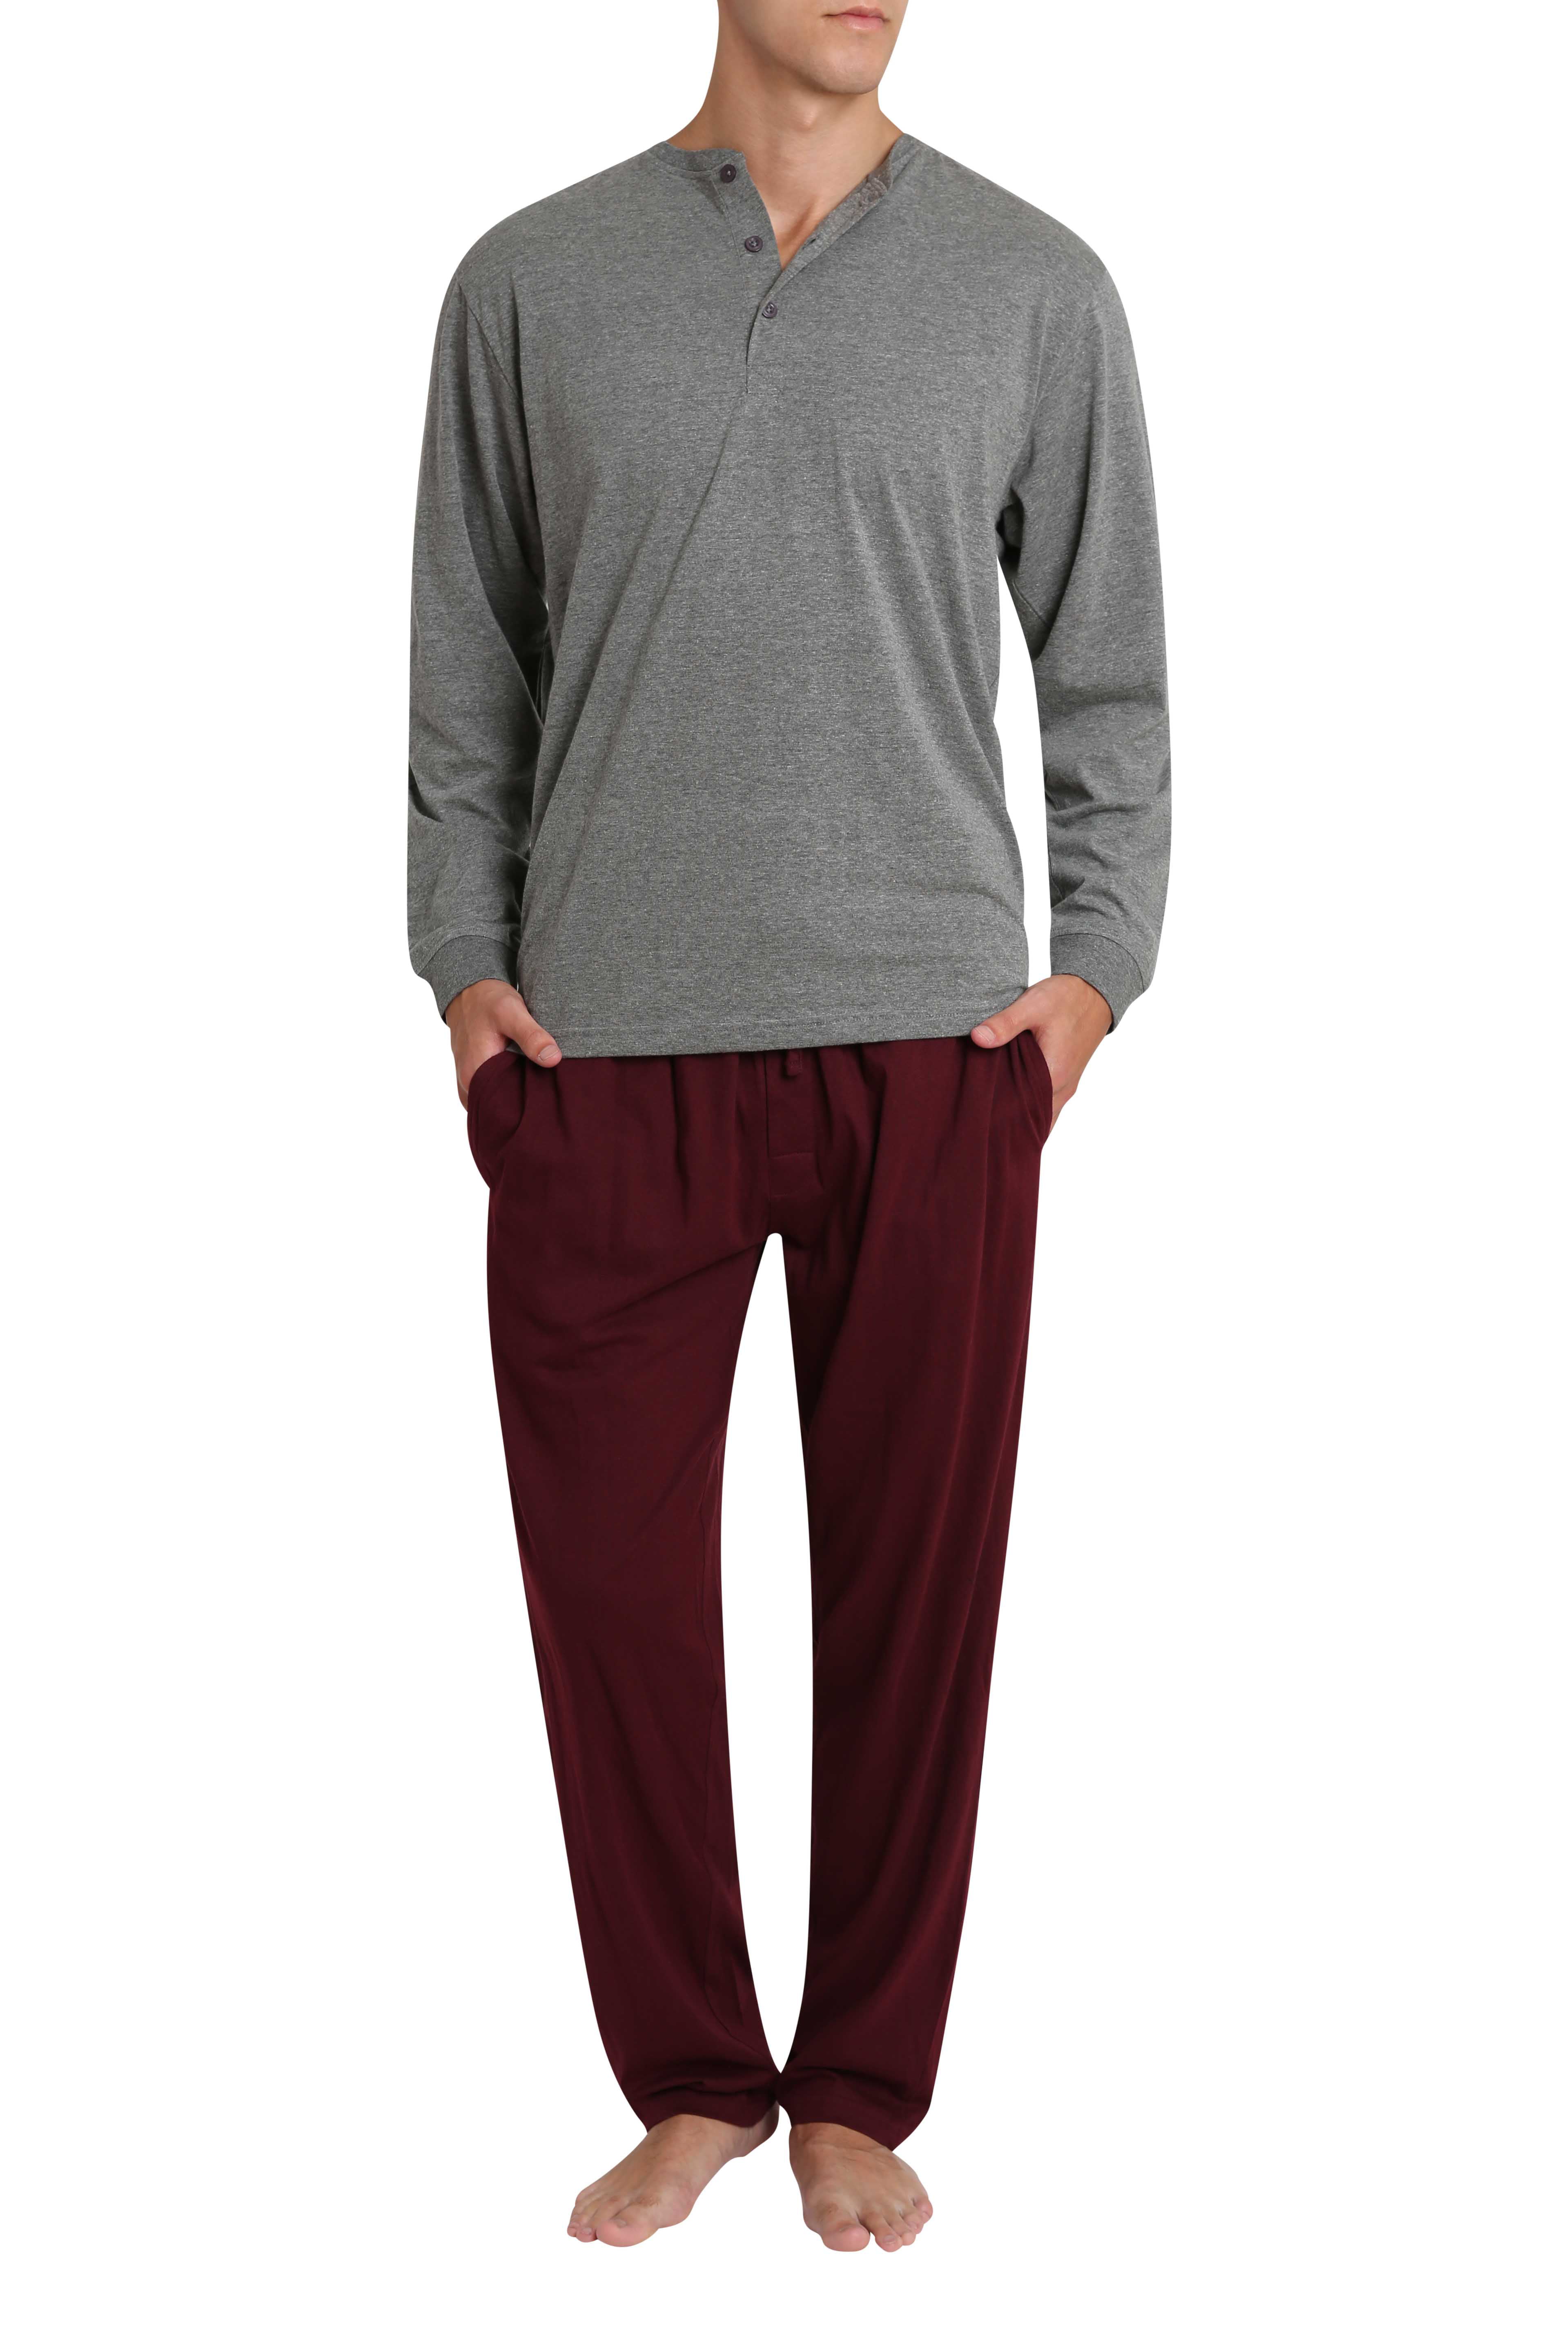 Mr. Sleep Adult Men's Soft Knit Cotton Pajama Pant and Long Sleeve ...